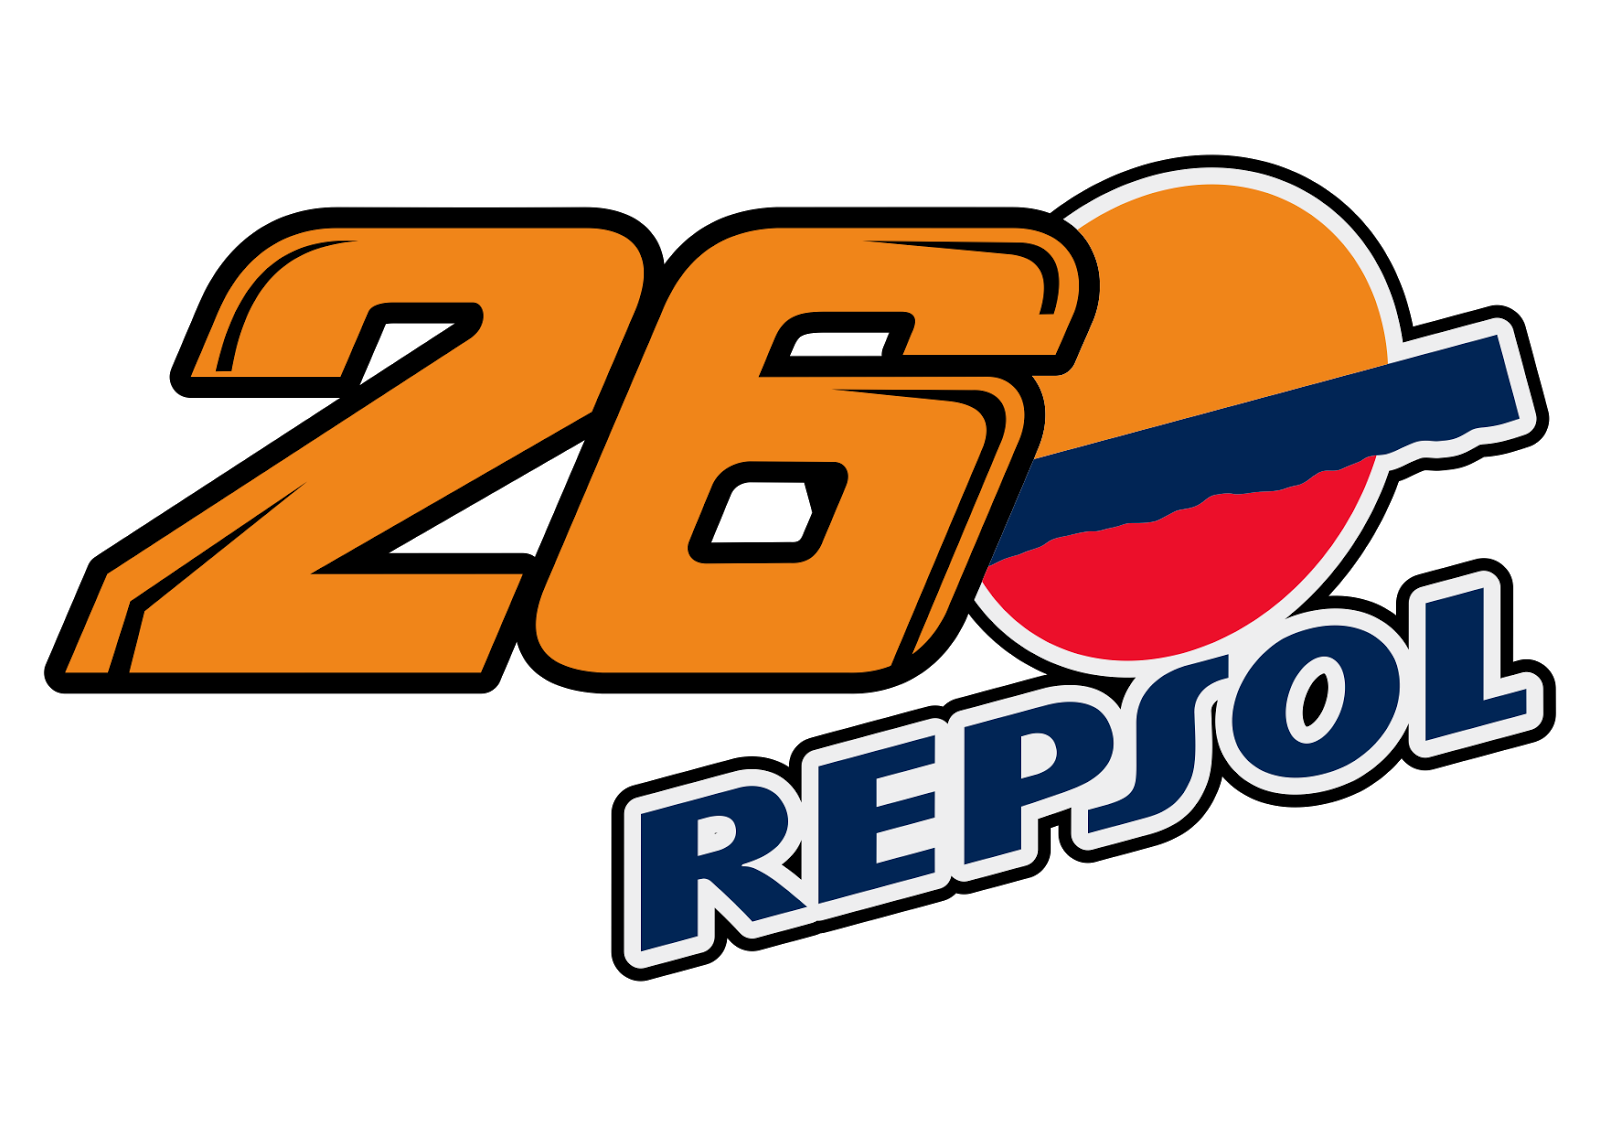 Dani Pedrosa 26 Repsol Logo Vector - Repsol Eps, Transparent background PNG HD thumbnail